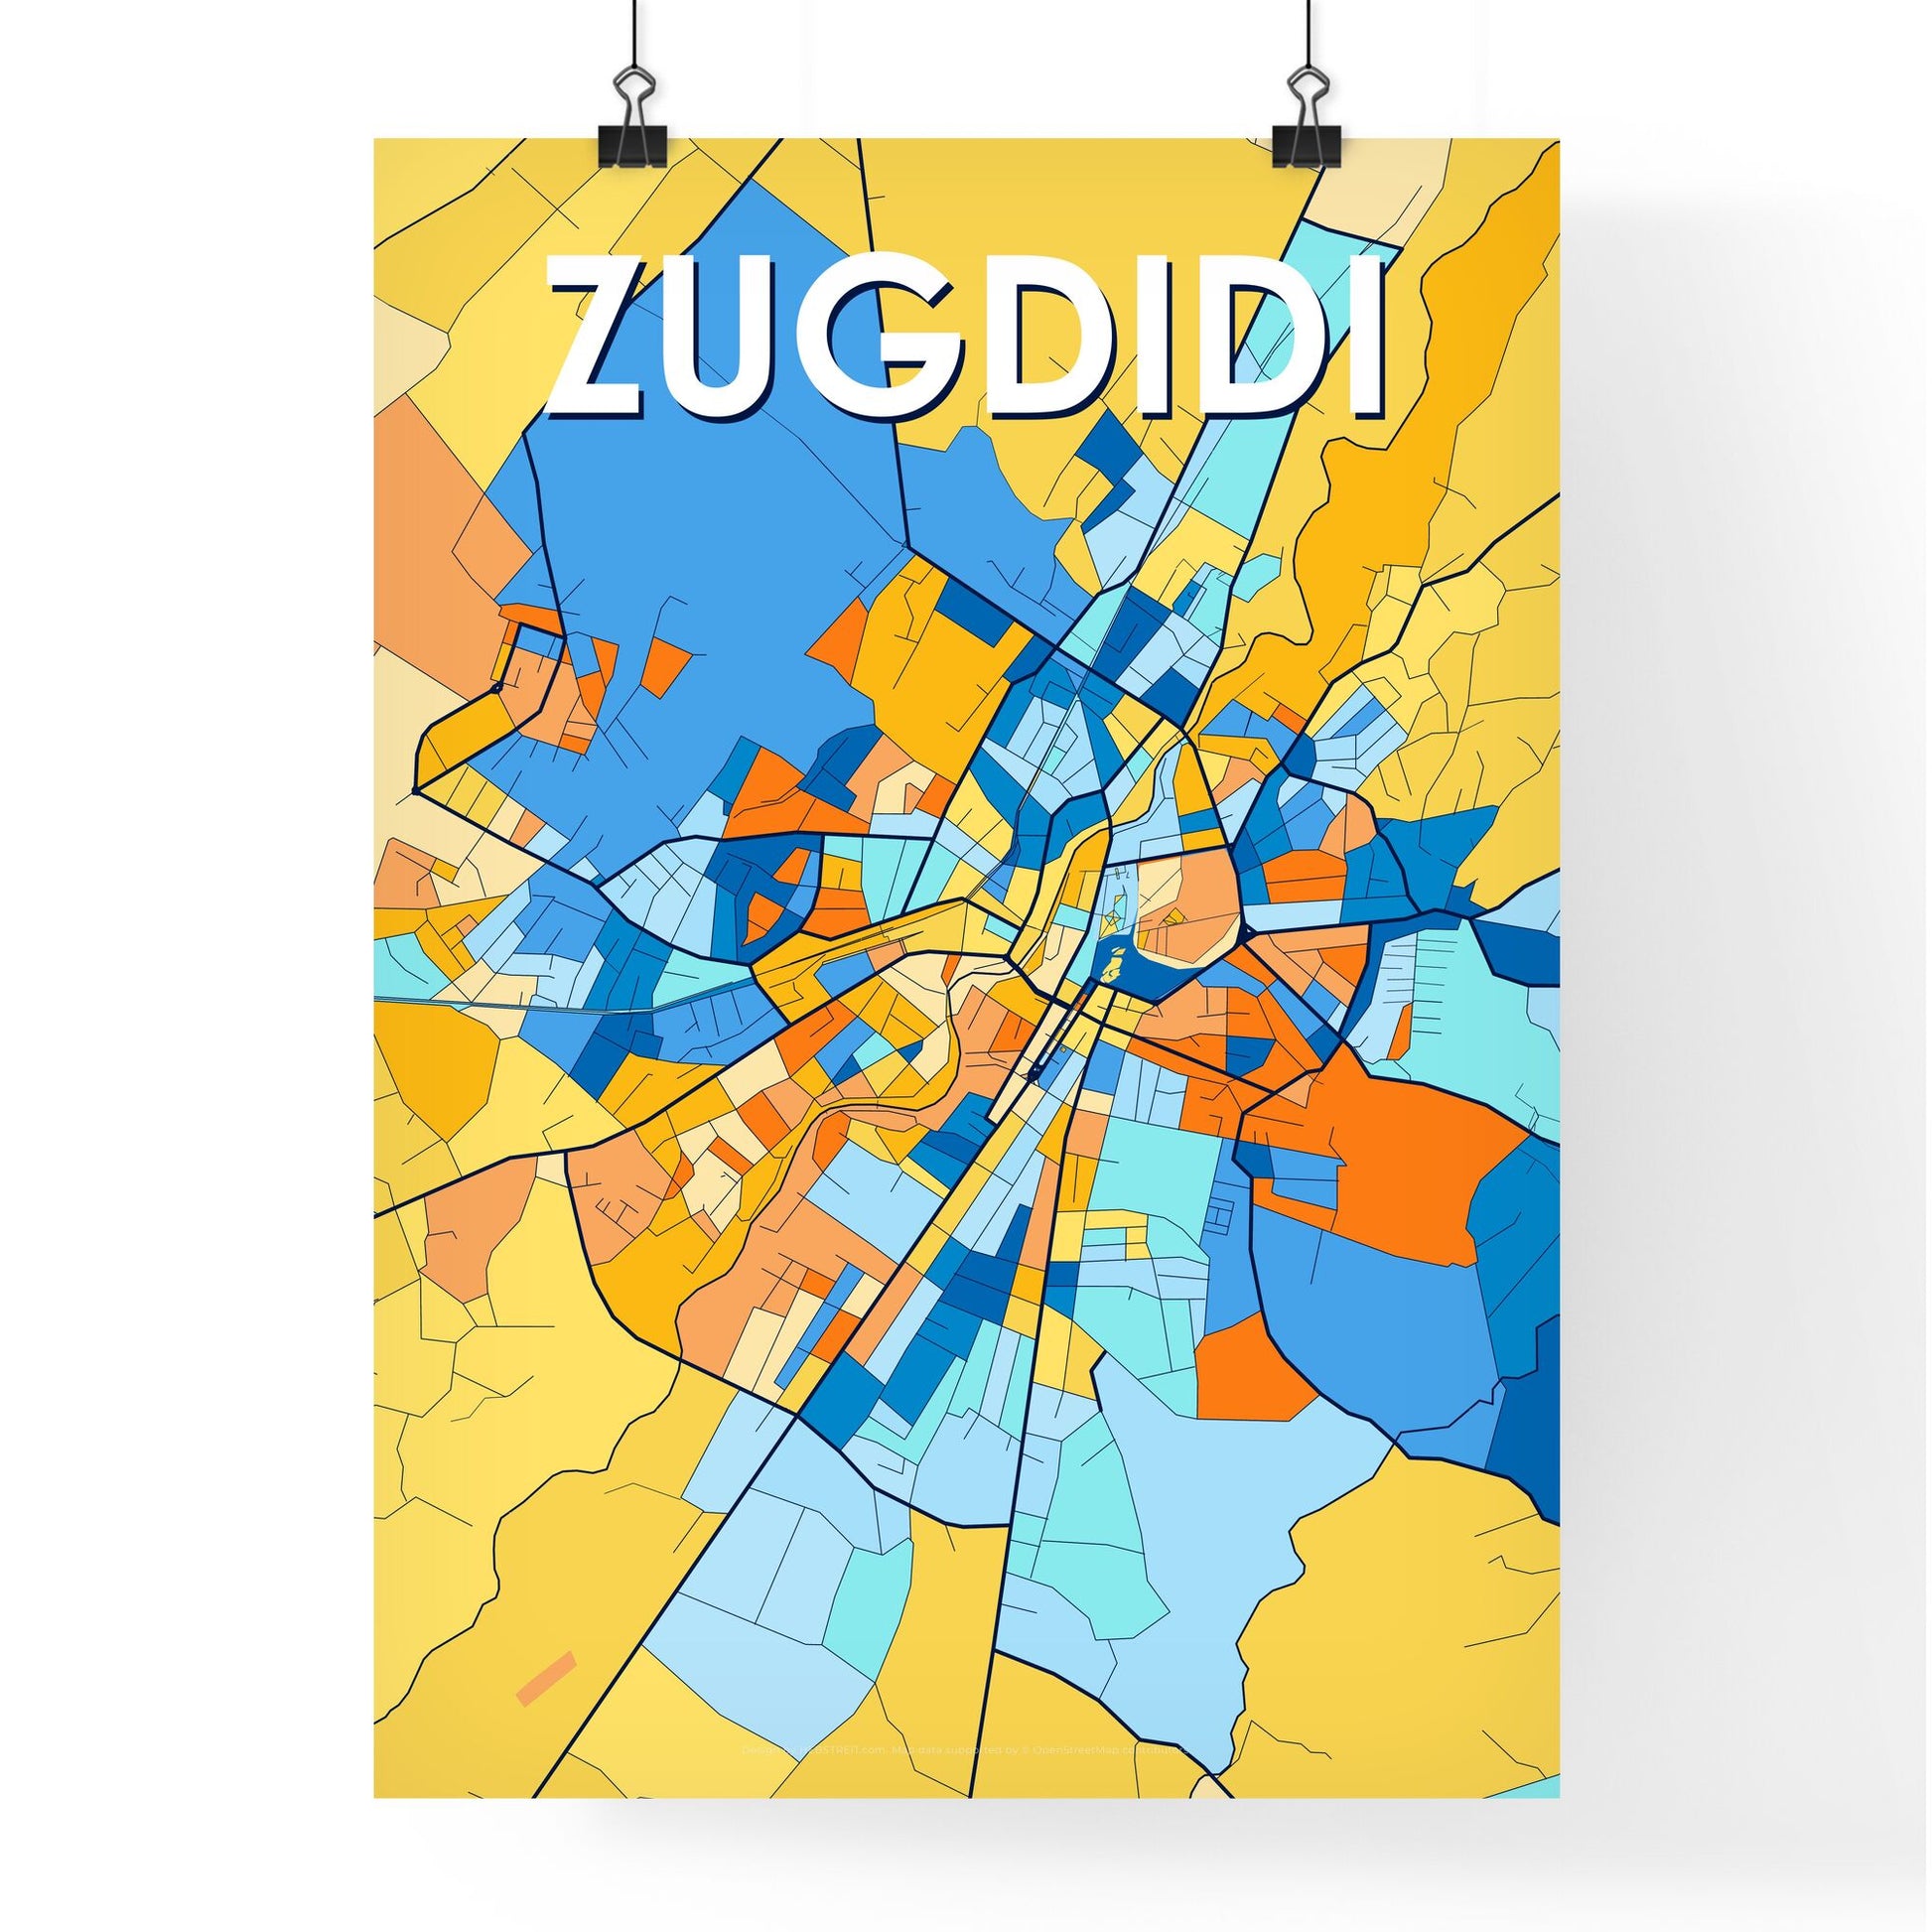 ZUGDIDI GEORGIA Vibrant Colorful Art Map Poster Blue Orange